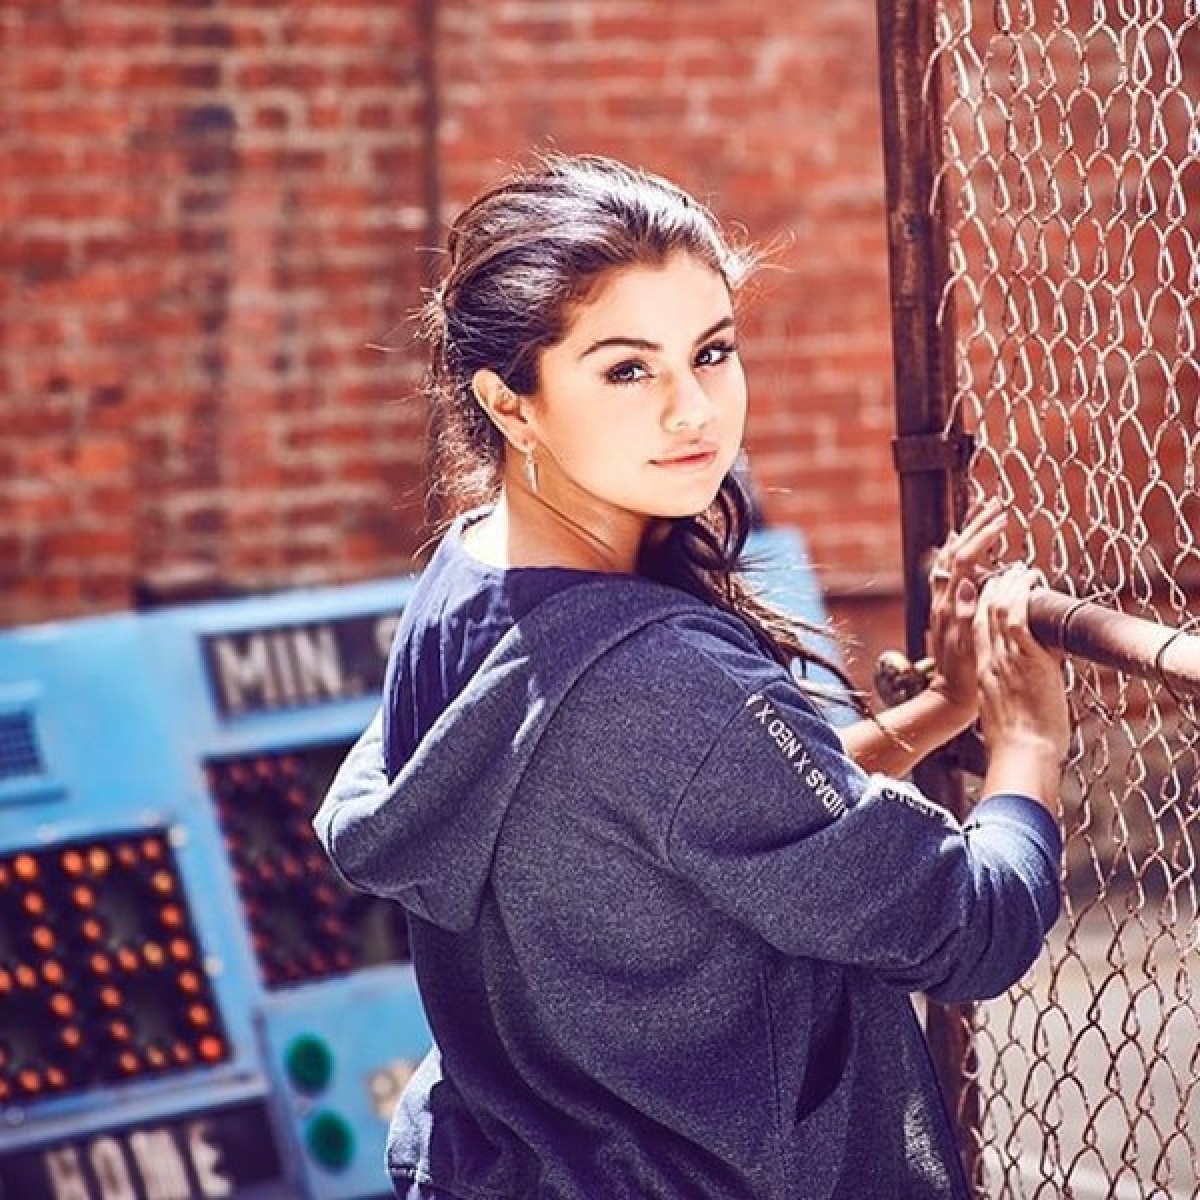 Selena Gomez khoẻ khoắn trong lookbook Adidas Neo